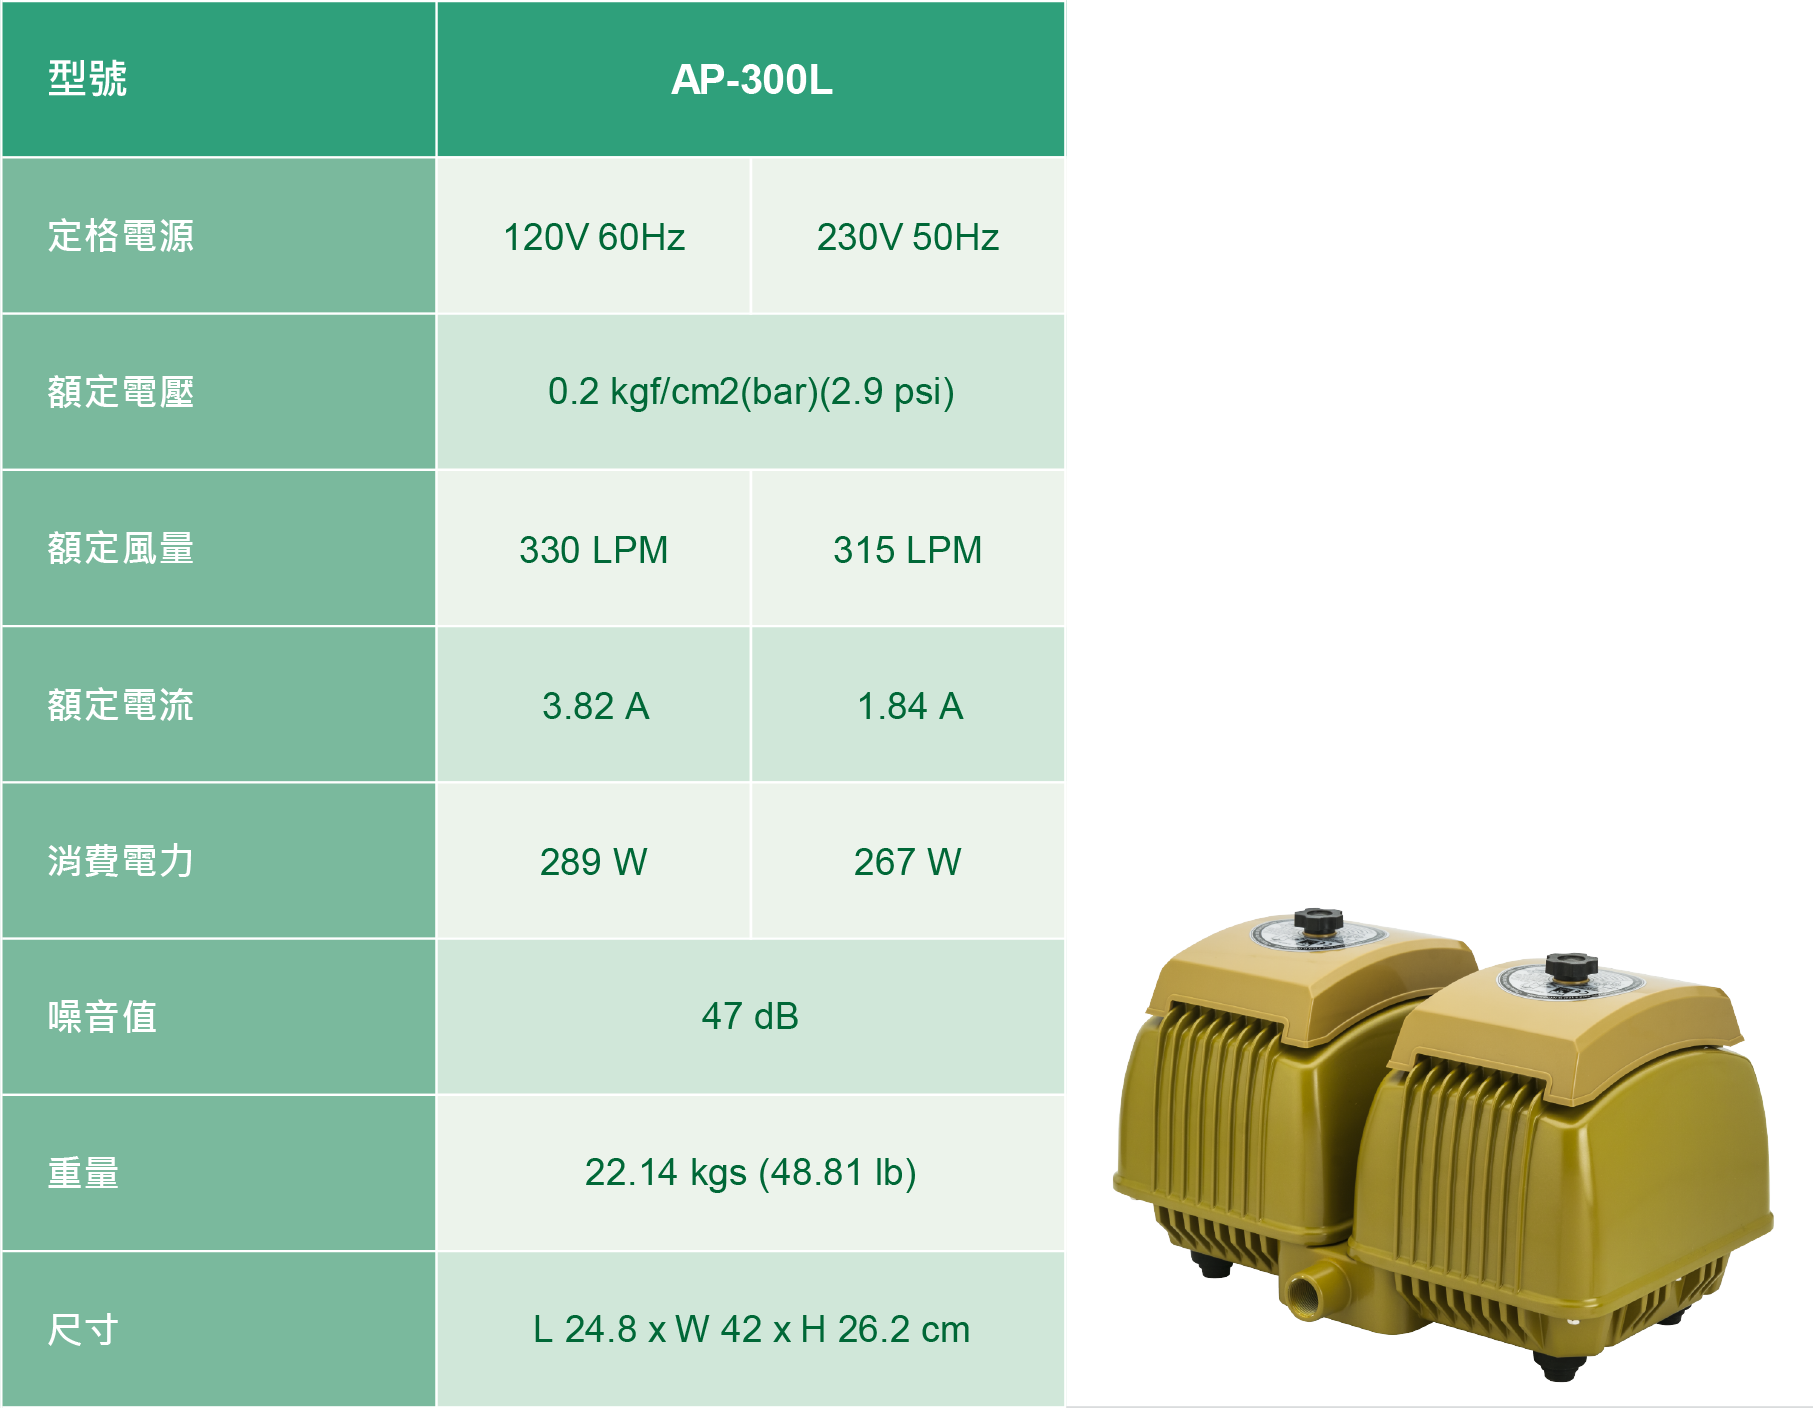 Linear Air Pumps AP-300L Performance